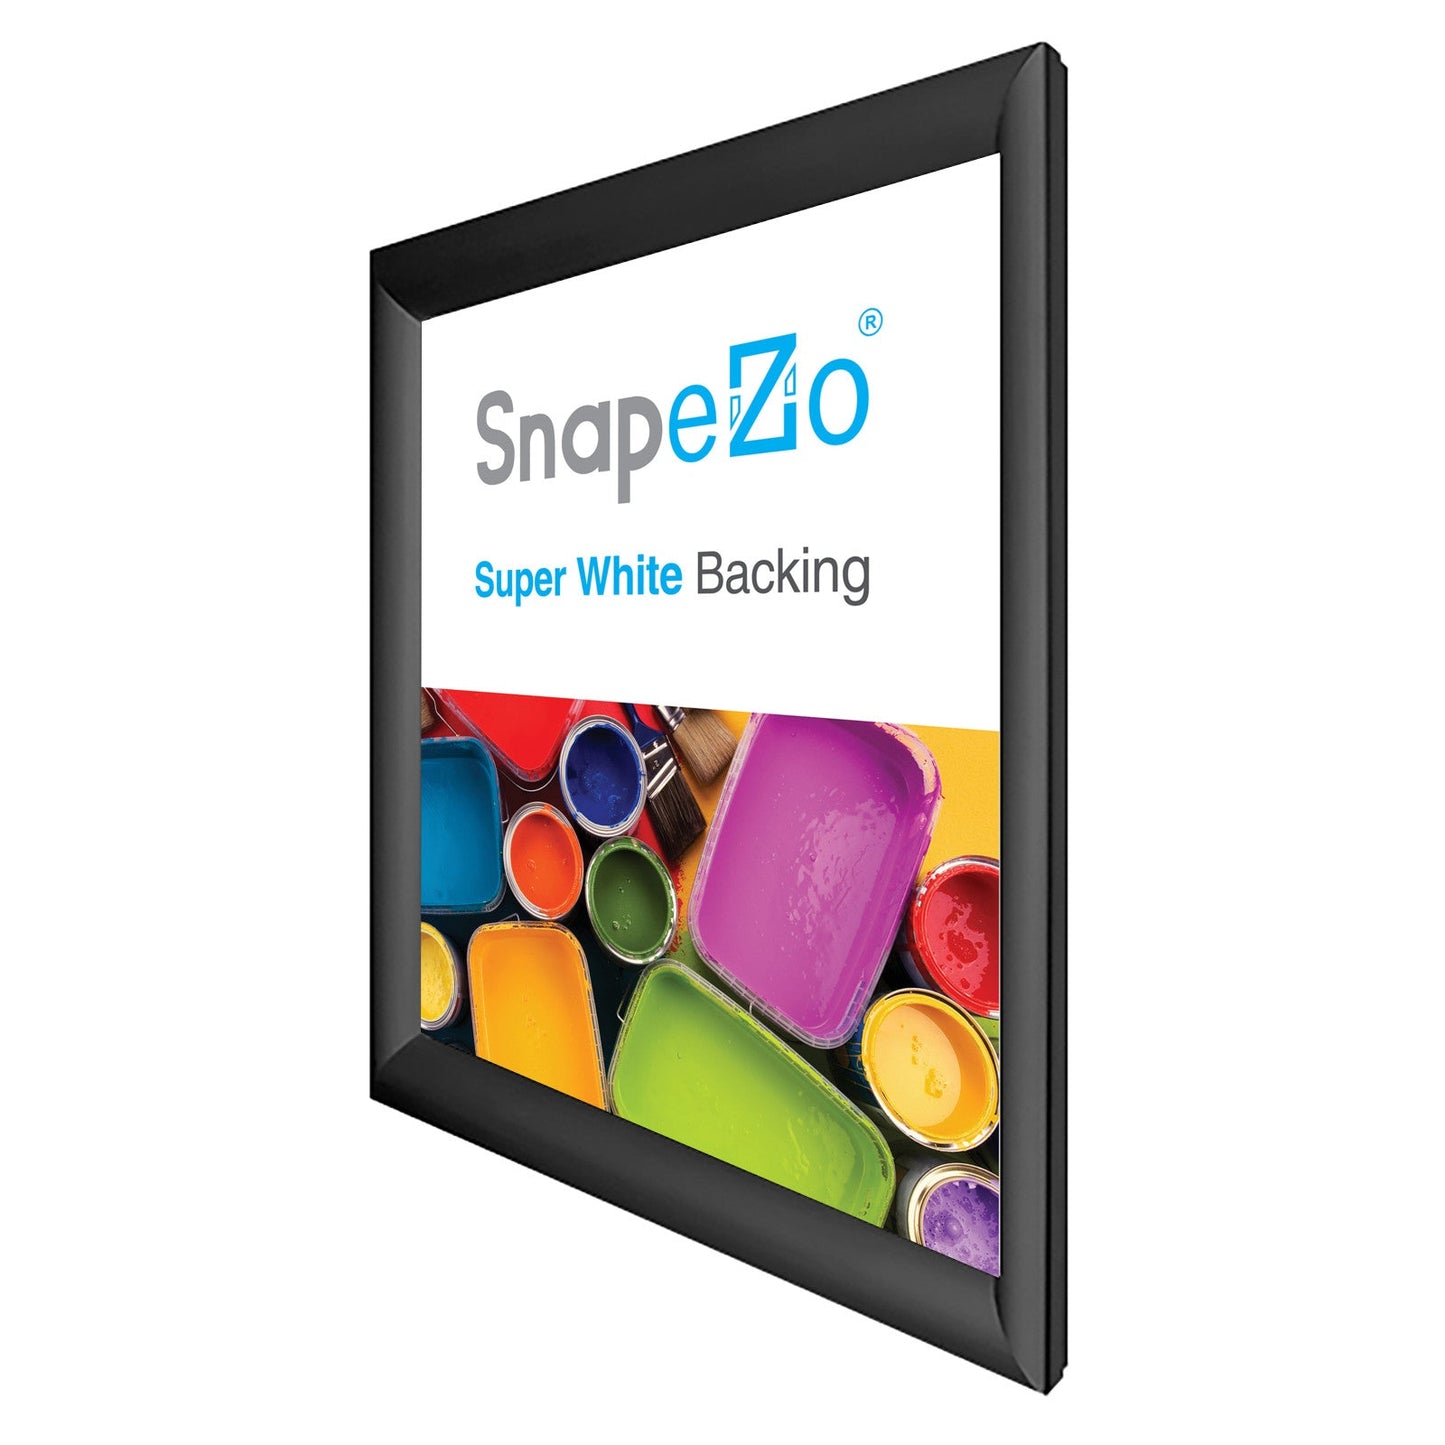 29x36 Black SnapeZo® Snap Frame - 1.2" Profile